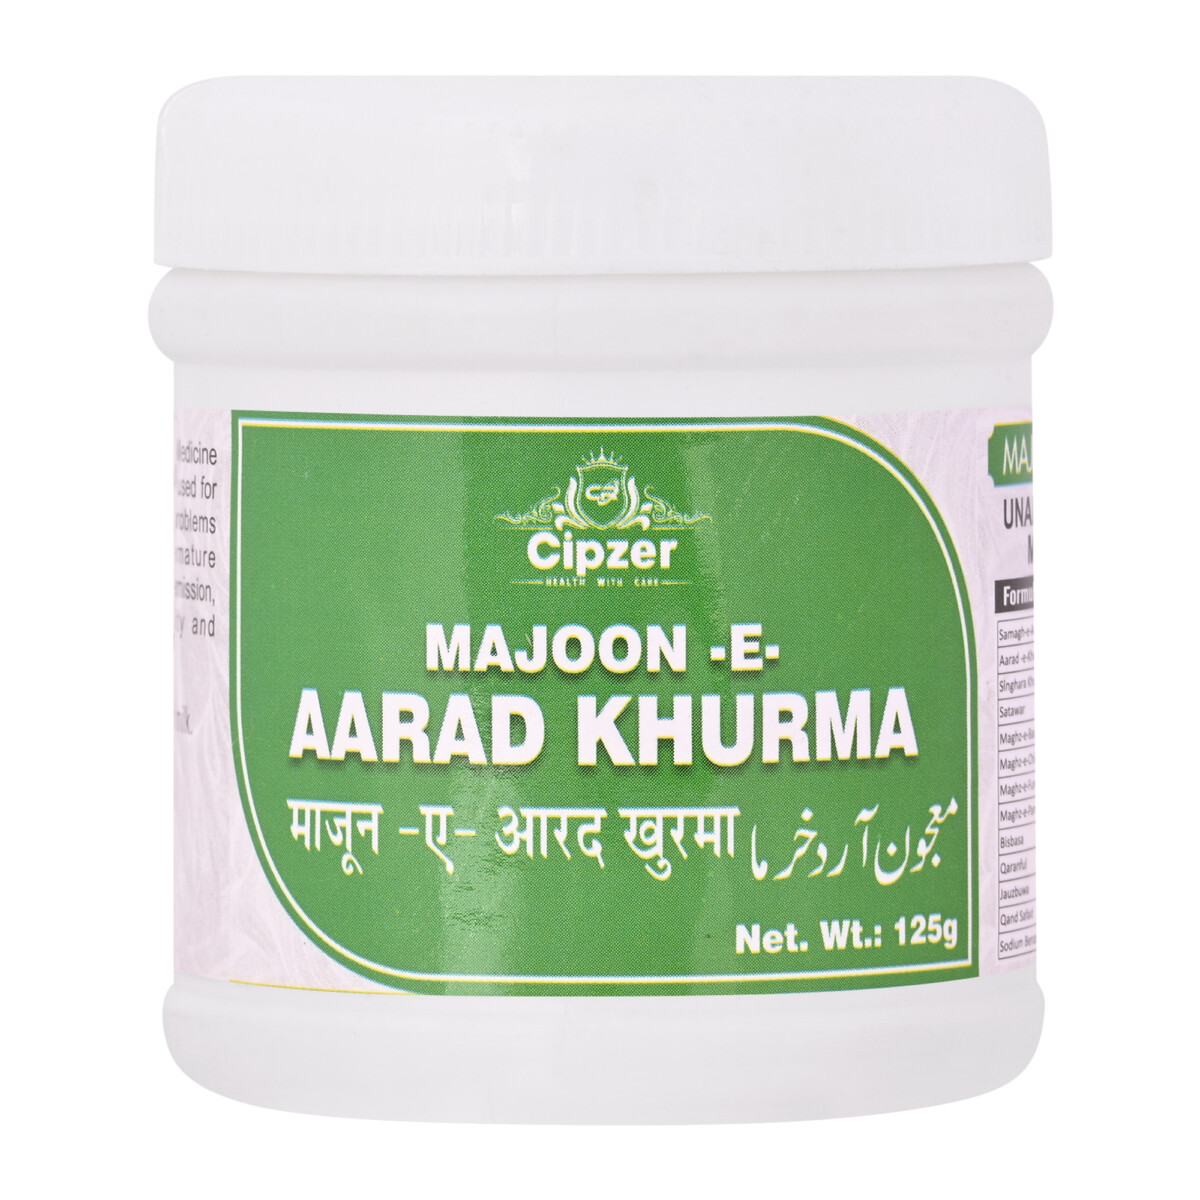 Majoon-e-Aarad Khurma